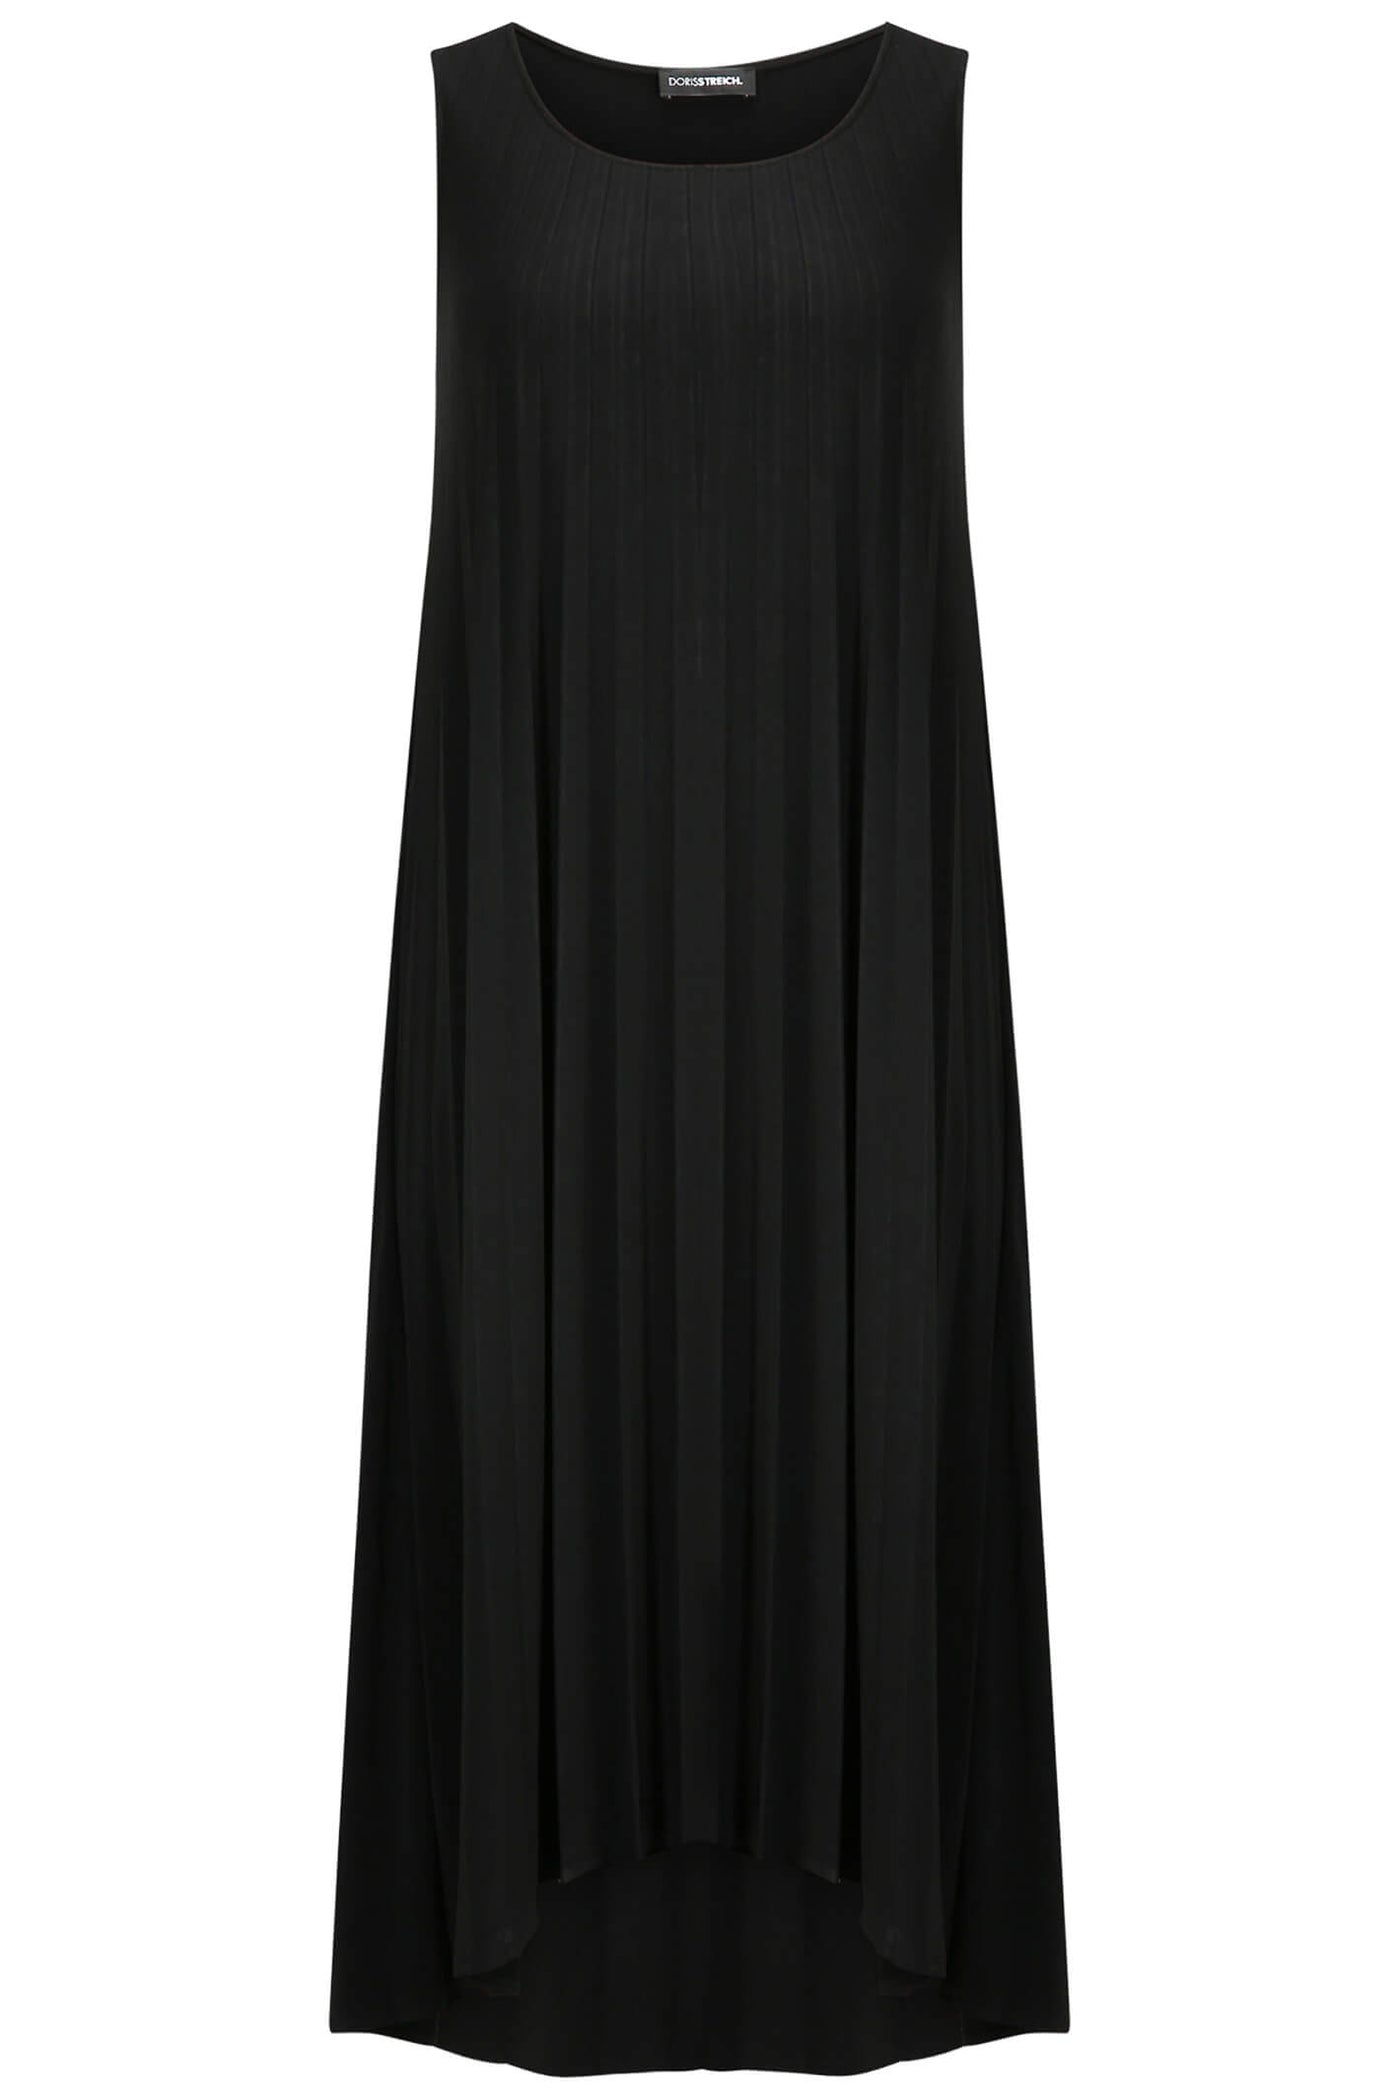 Doris Streich 680 186 Black Pleated High-Low Hem Sleeveless Dress - Rouge Boutique